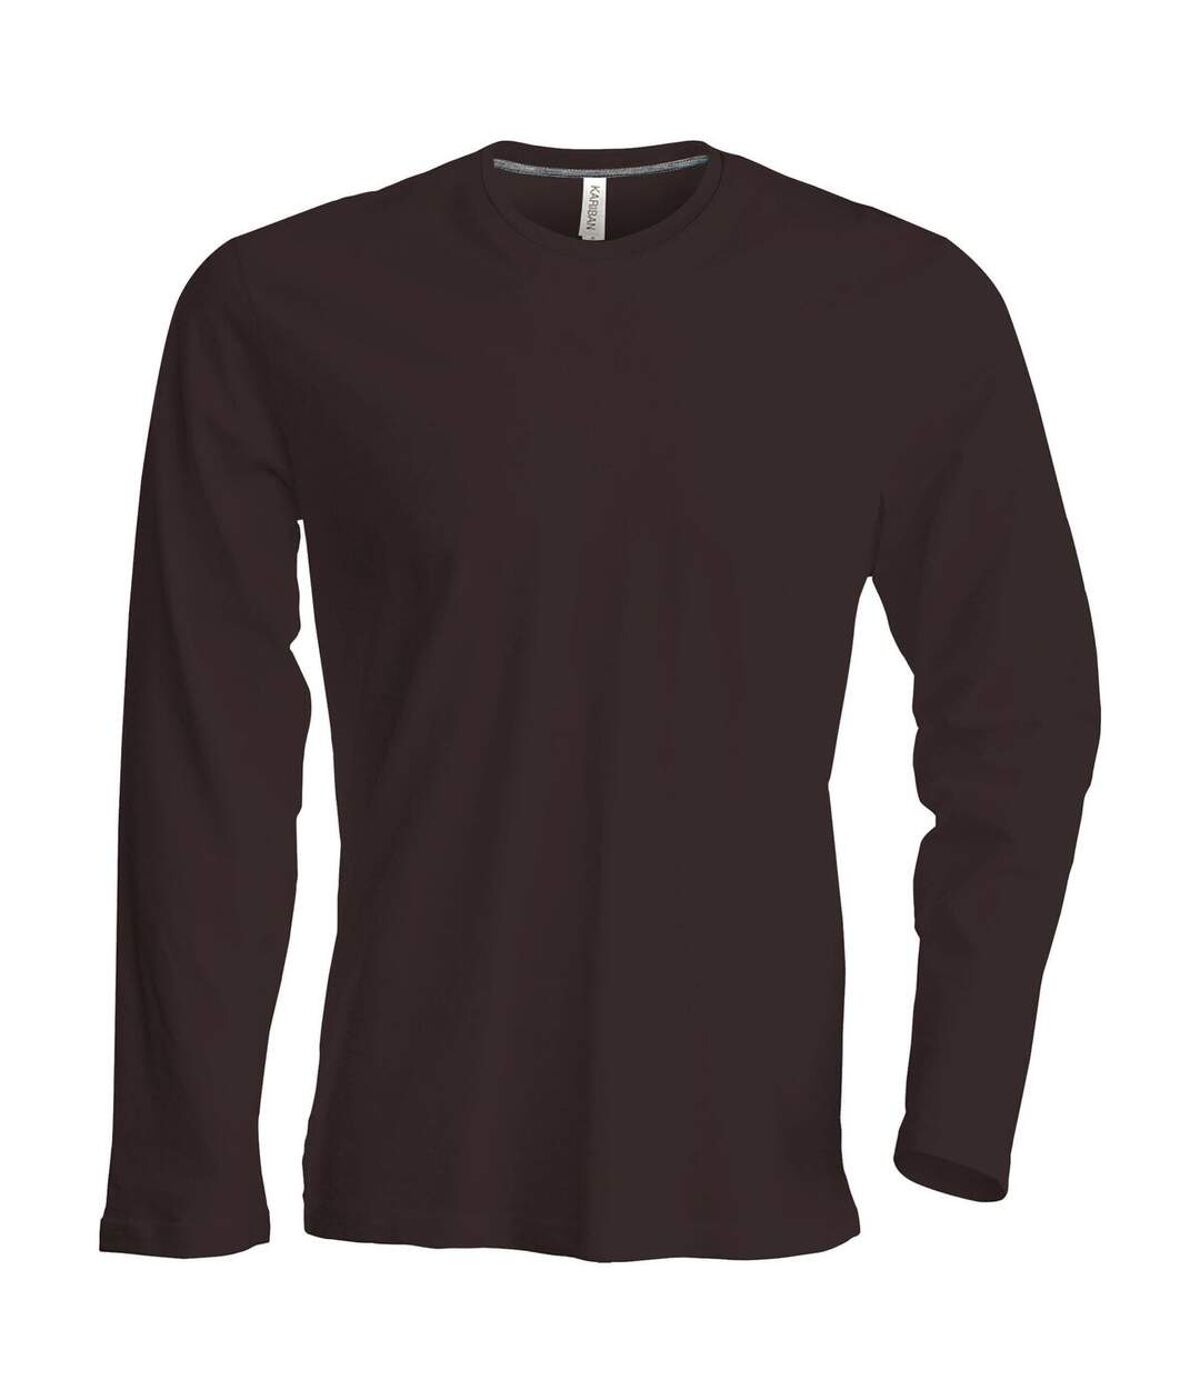 T-shirt manches longues col rond - K359 - marron chocolat - homme